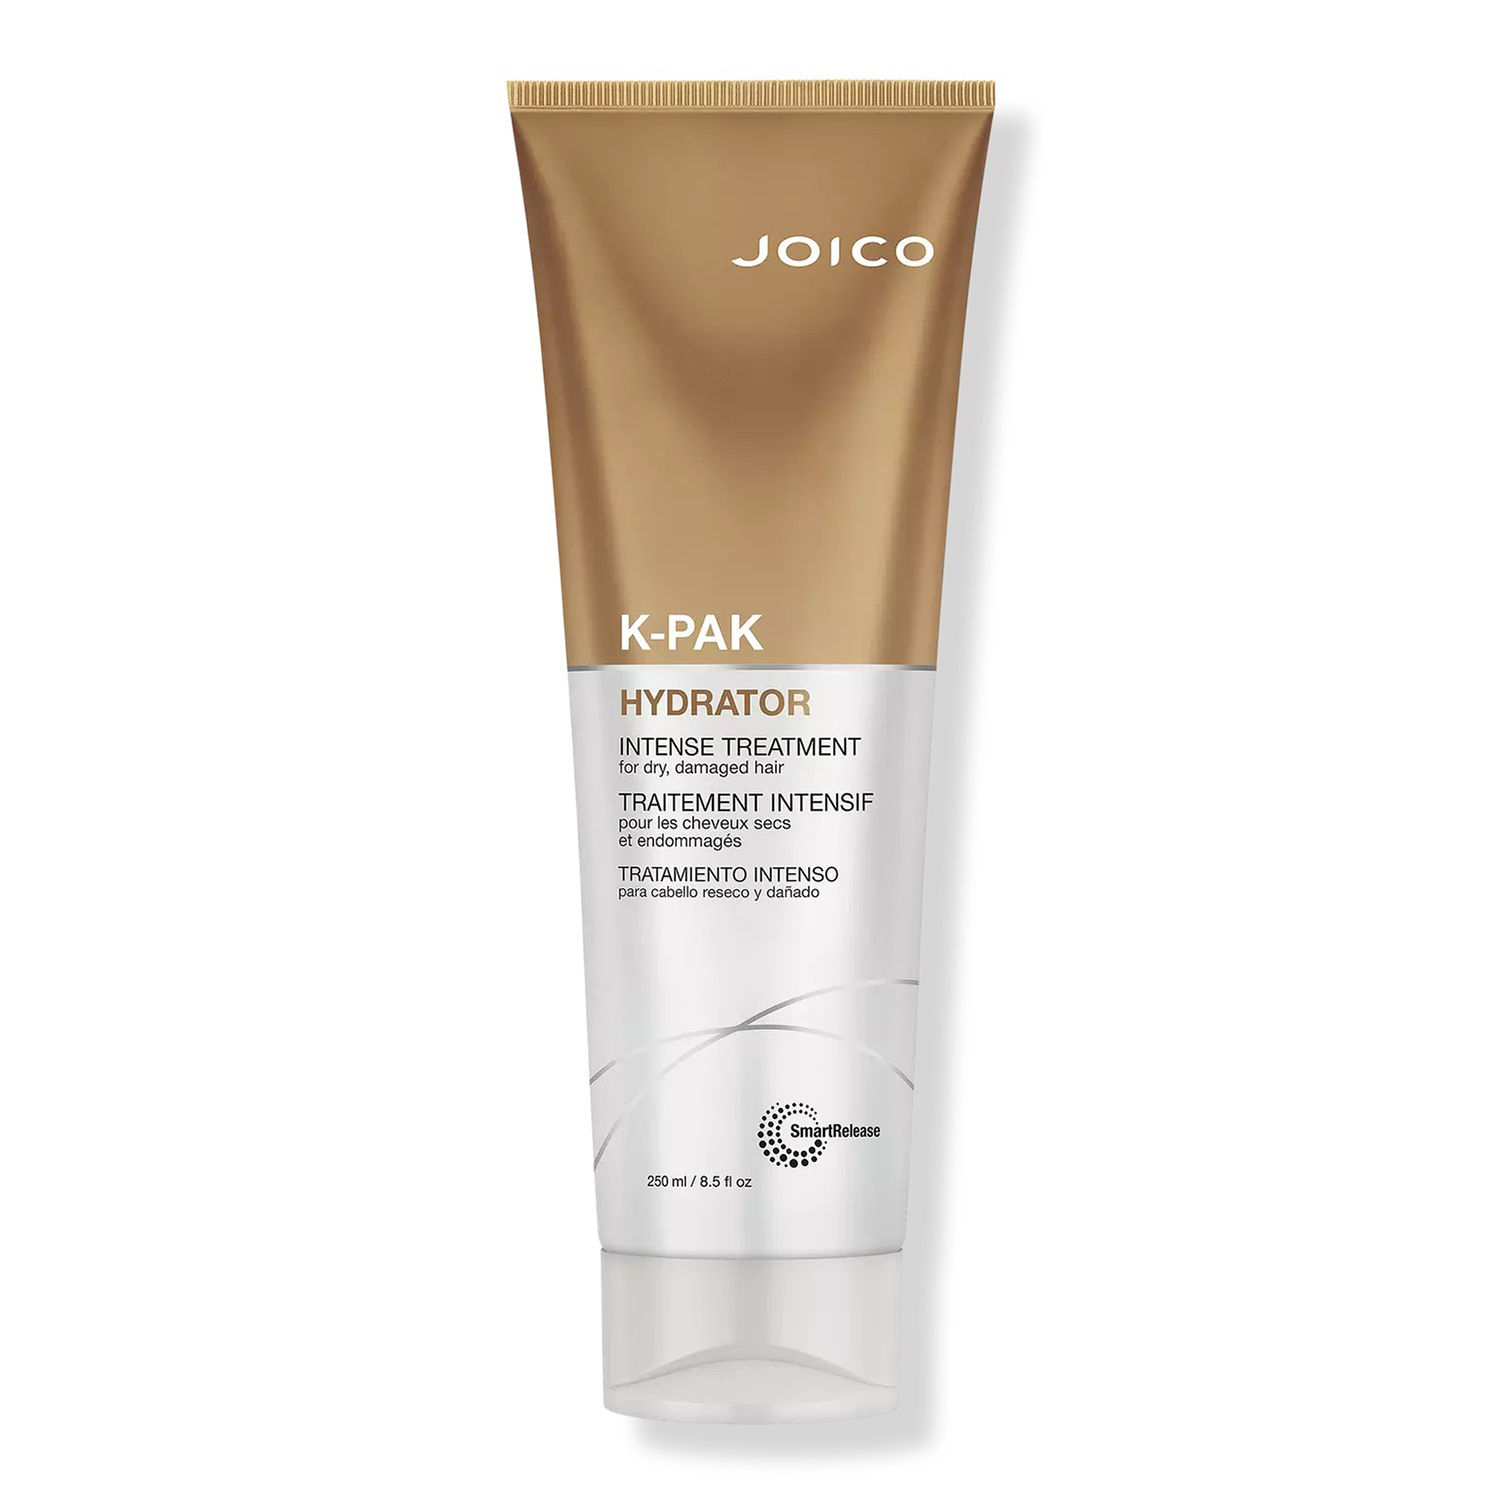 Joico K-Pak Intense Hydrator Treatment for Dry Damaged Hair, 8.5 oz - image 1 of 5